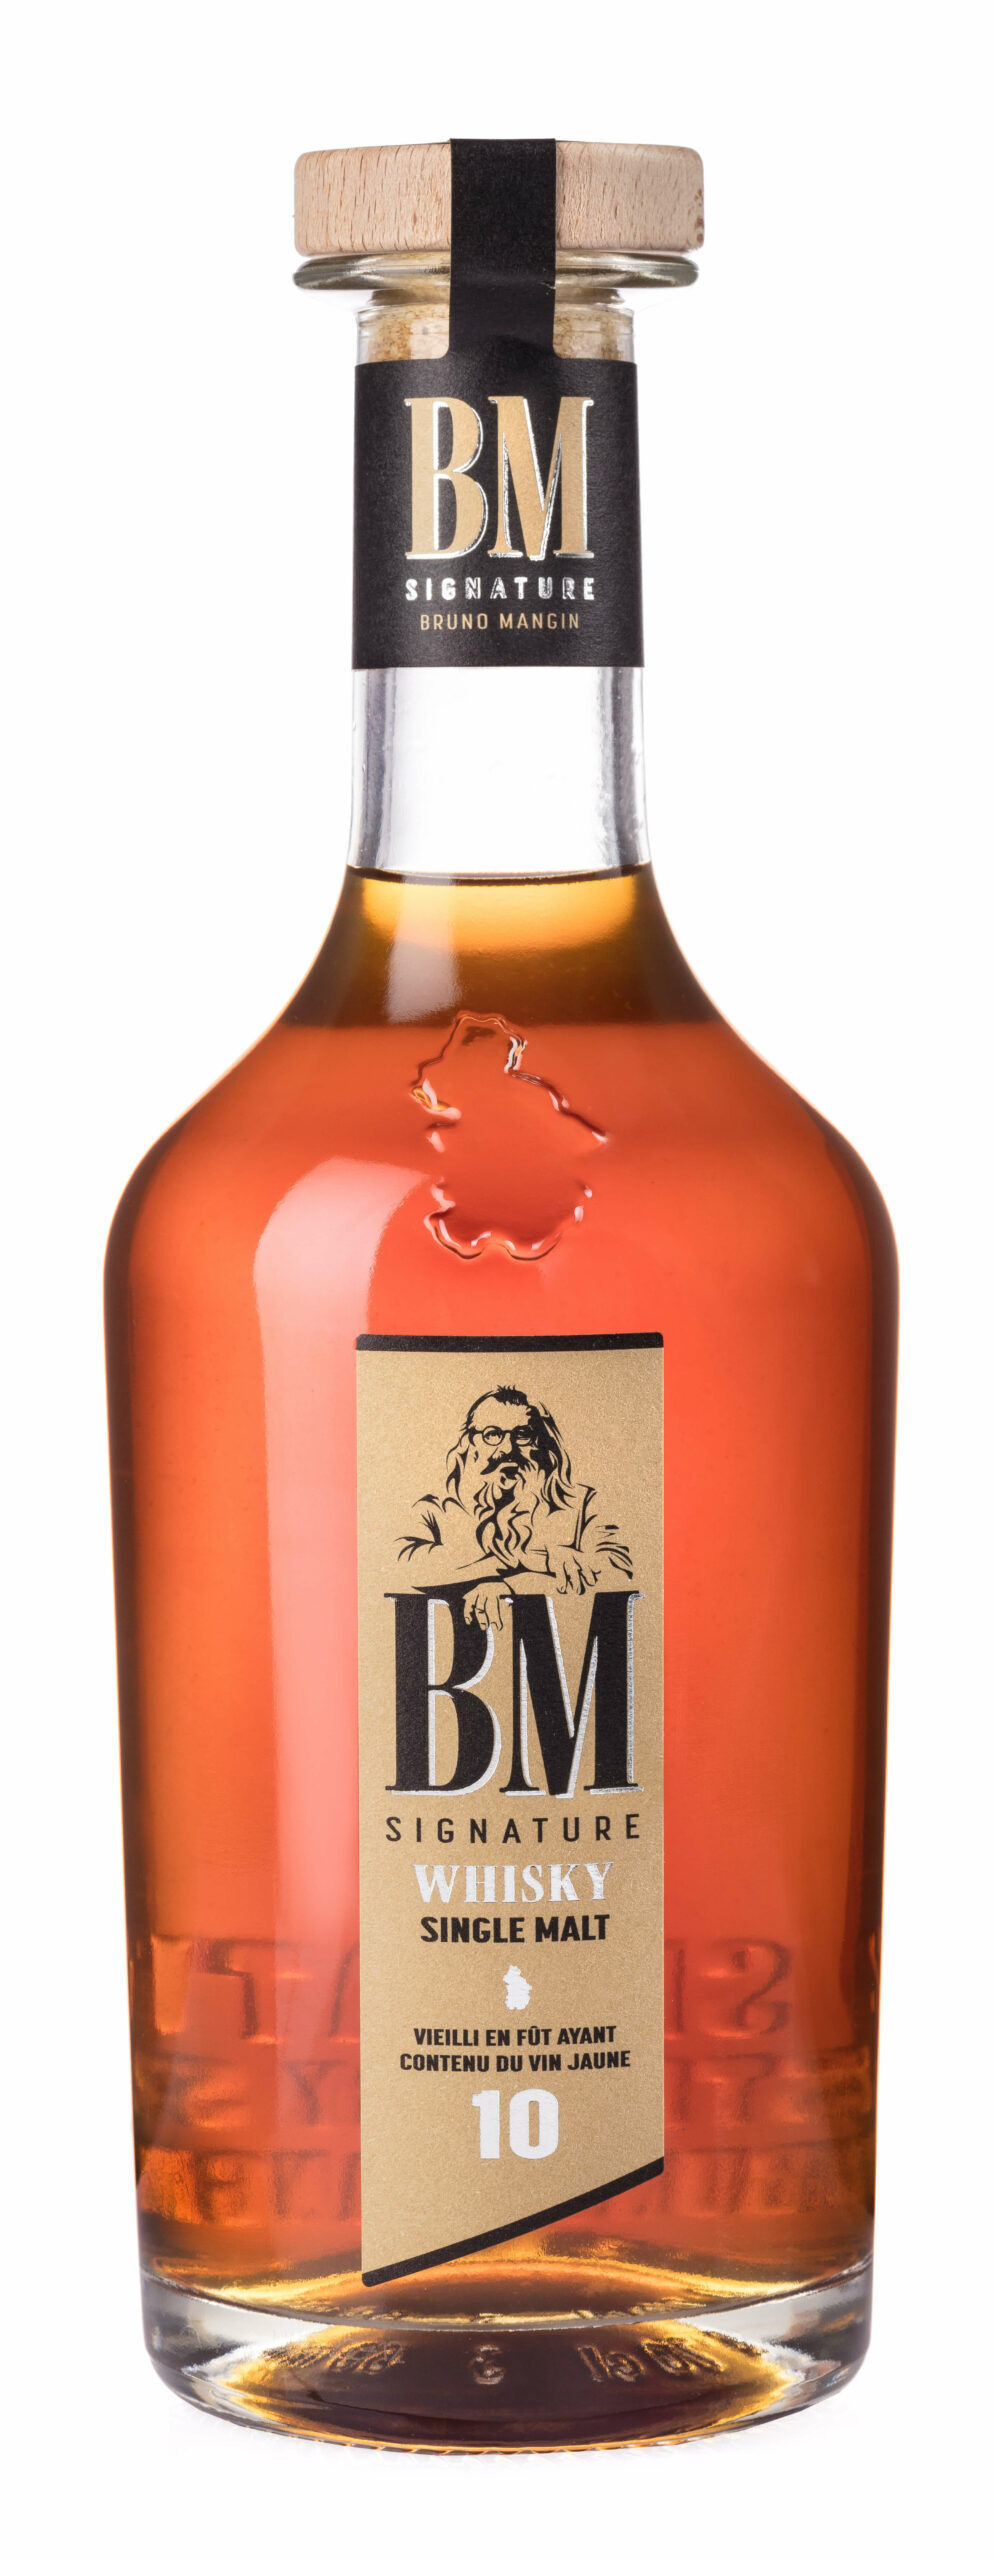 BM Signature whisky single malt, vin jaune